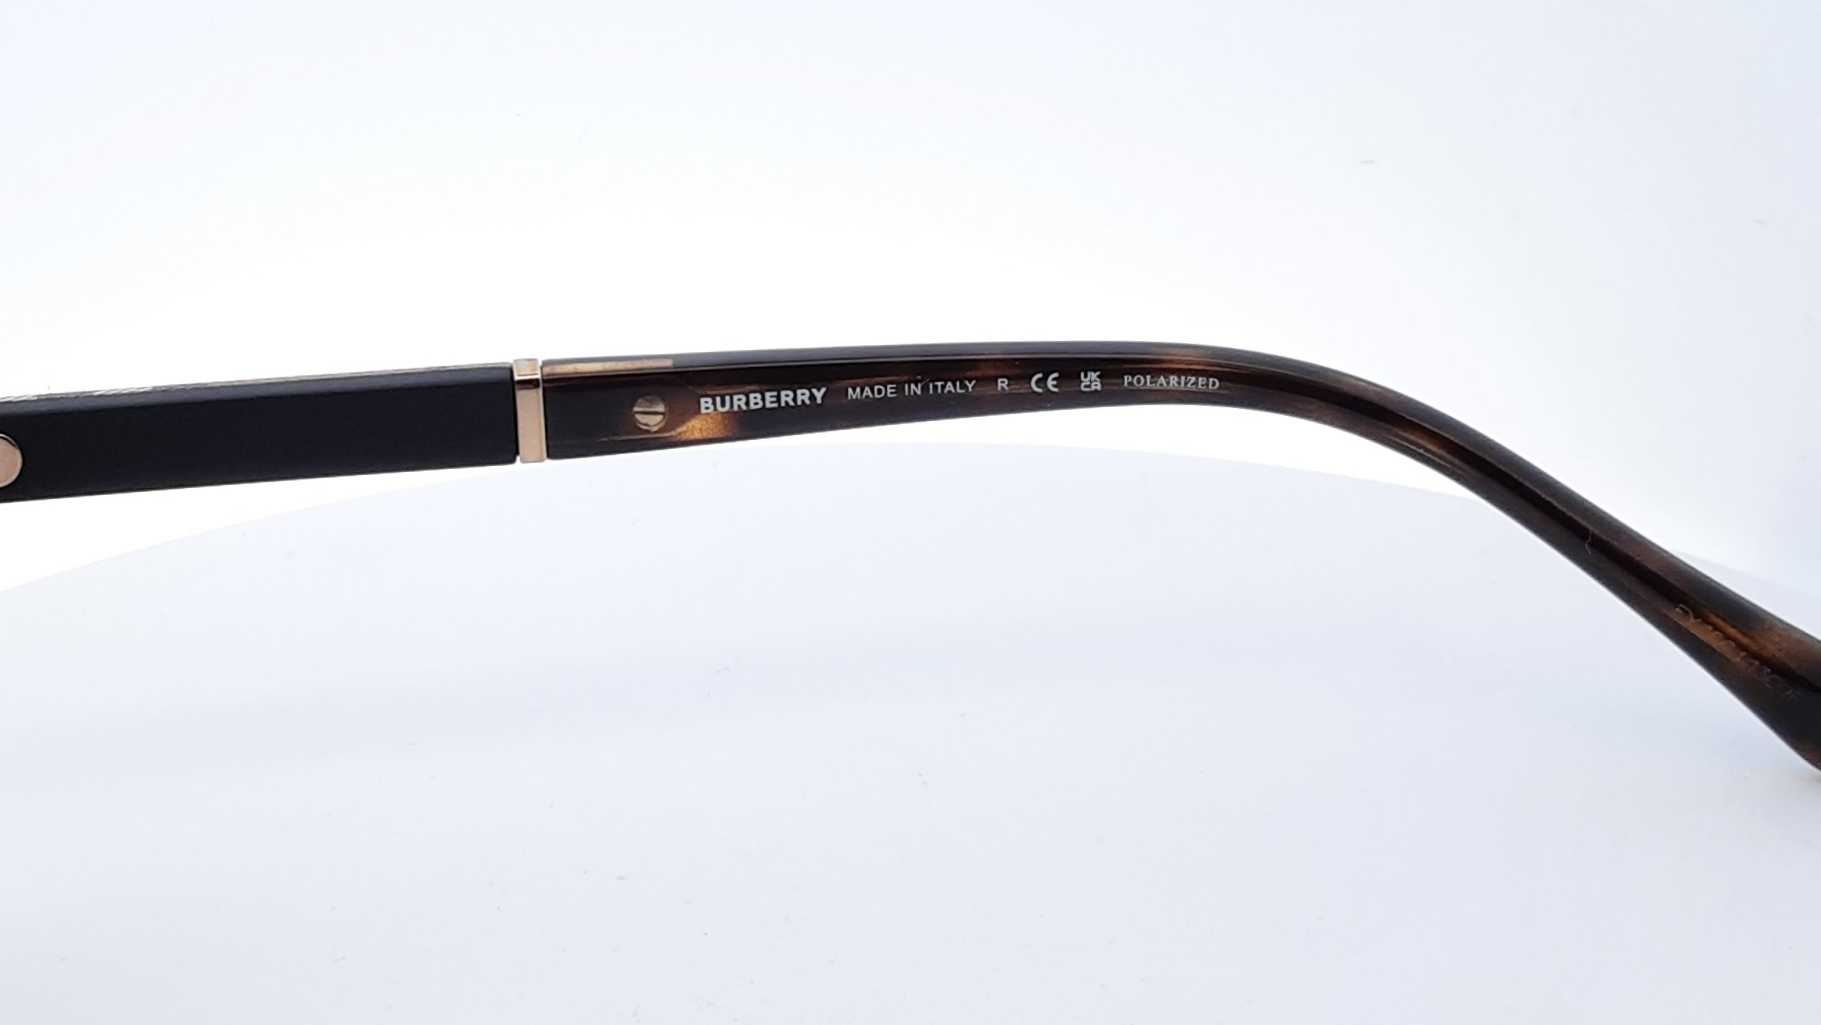 Burberry B3080 Polished Gold Gradient Sunglasses Lhprde 144020012054